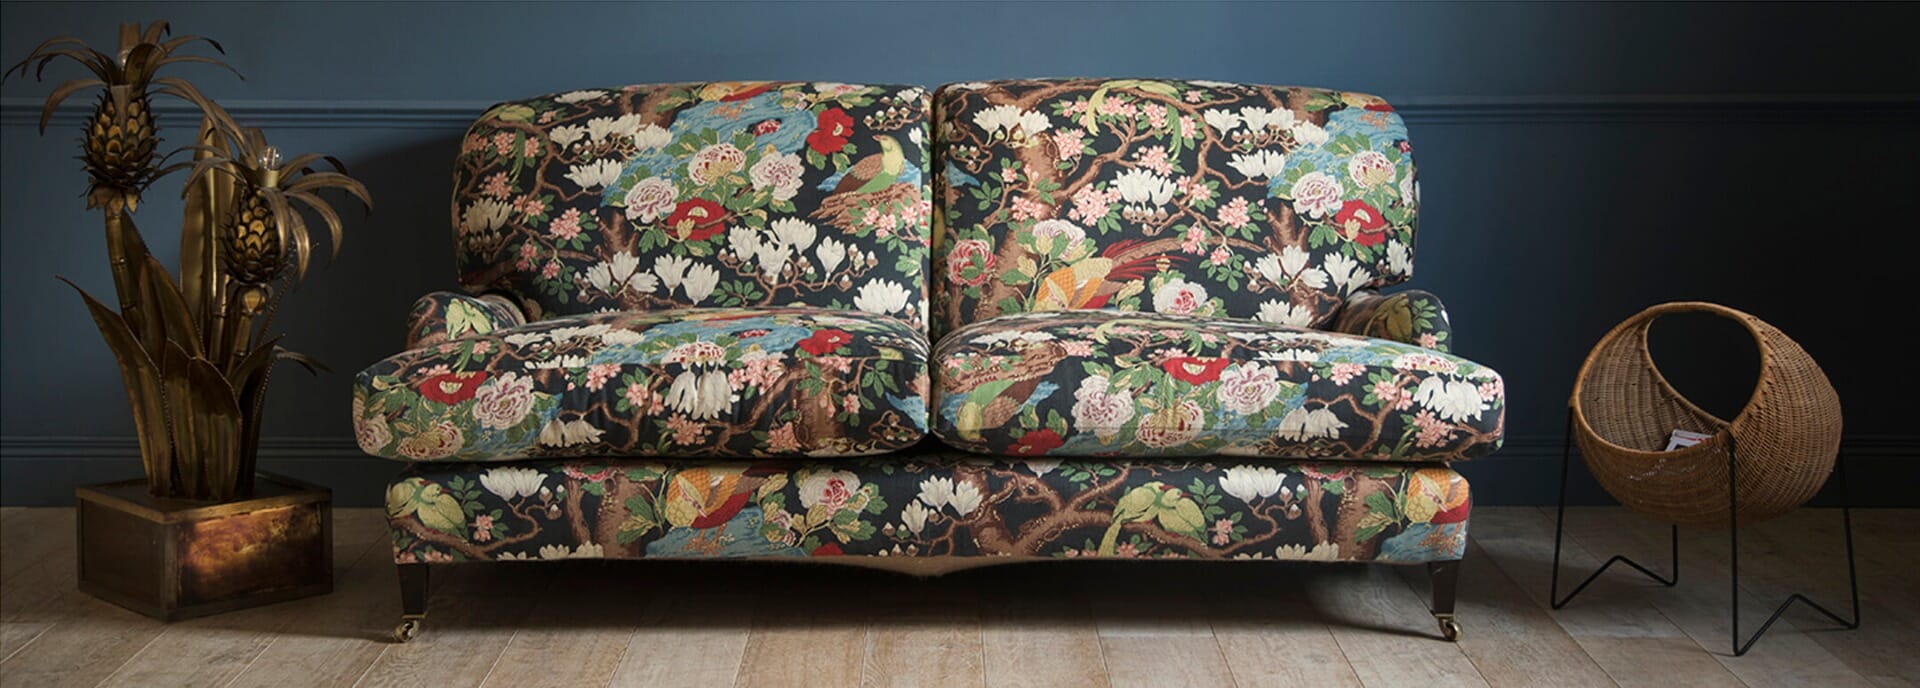 Lorfords Created Bespoke Traditional British Upholstery